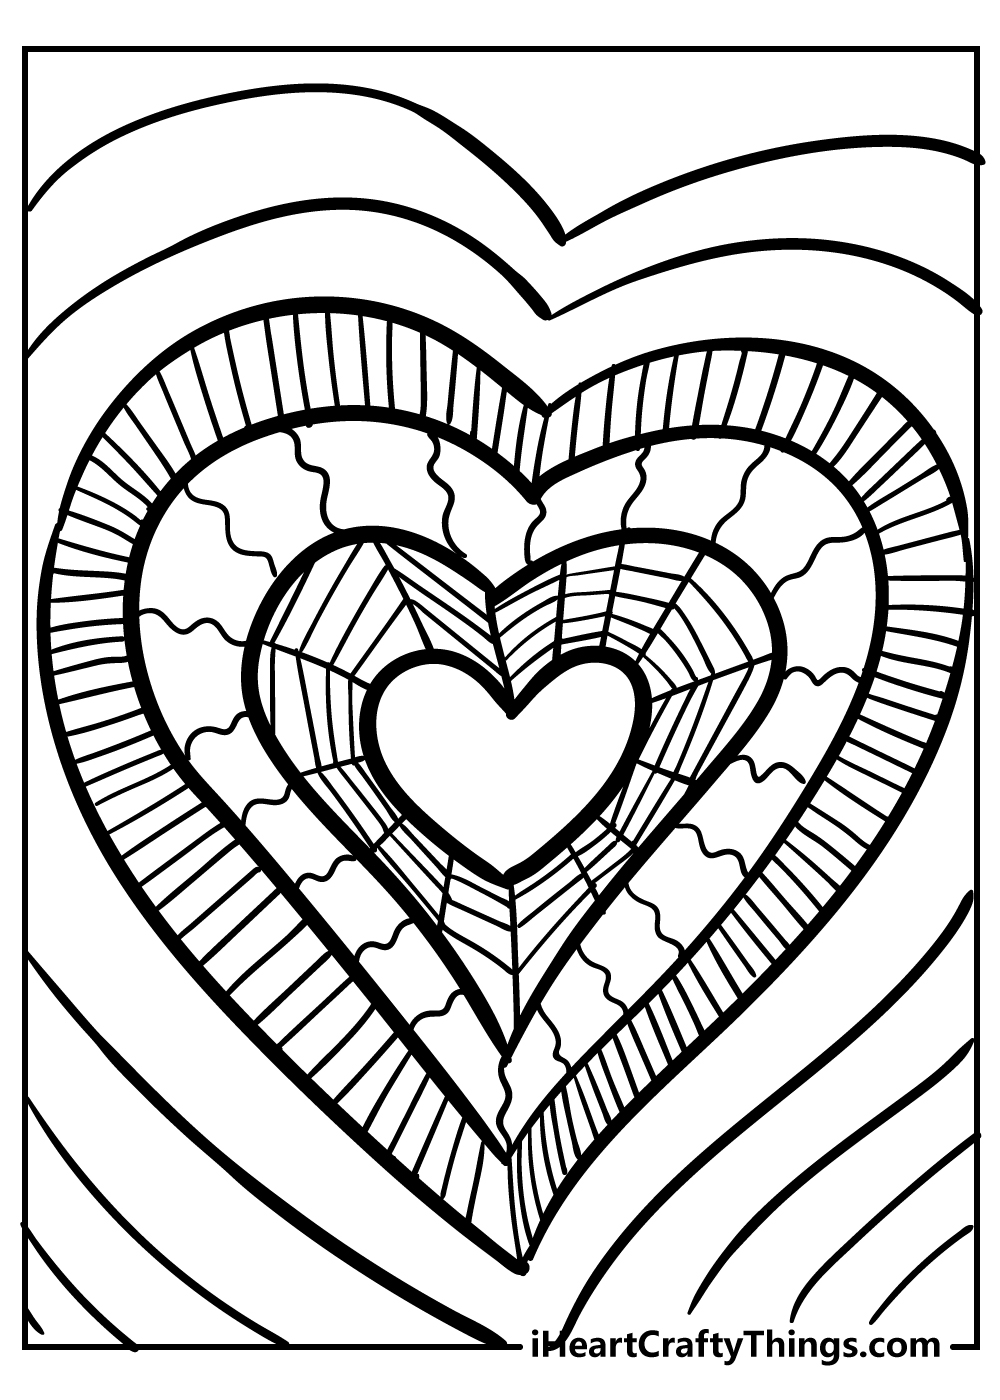  heart coloring original sheet for children free download